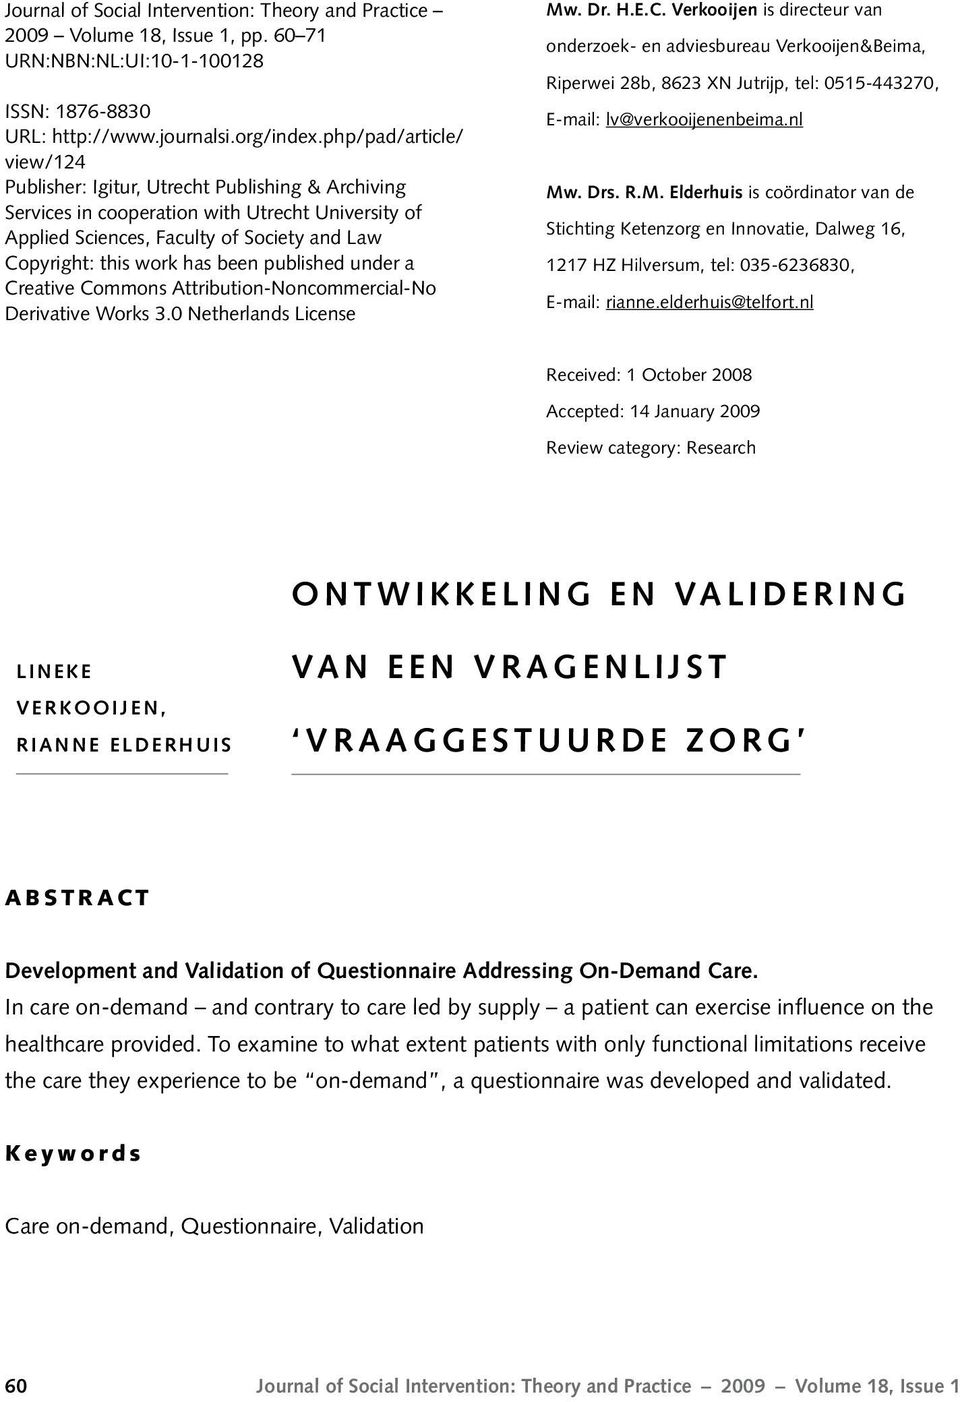 been published under a Creative Commons Attribution-Noncommercial-No Derivative Works 3.0 Netherlands License Mw. Dr. H.E.C. Verkooijen is directeur van onderzoek- en adviesbureau Verkooijen&Beima, Riperwei 28b, 8623 XN Jutrijp, tel: 0515-443270, E-mail: lv@verkooijenenbeima.